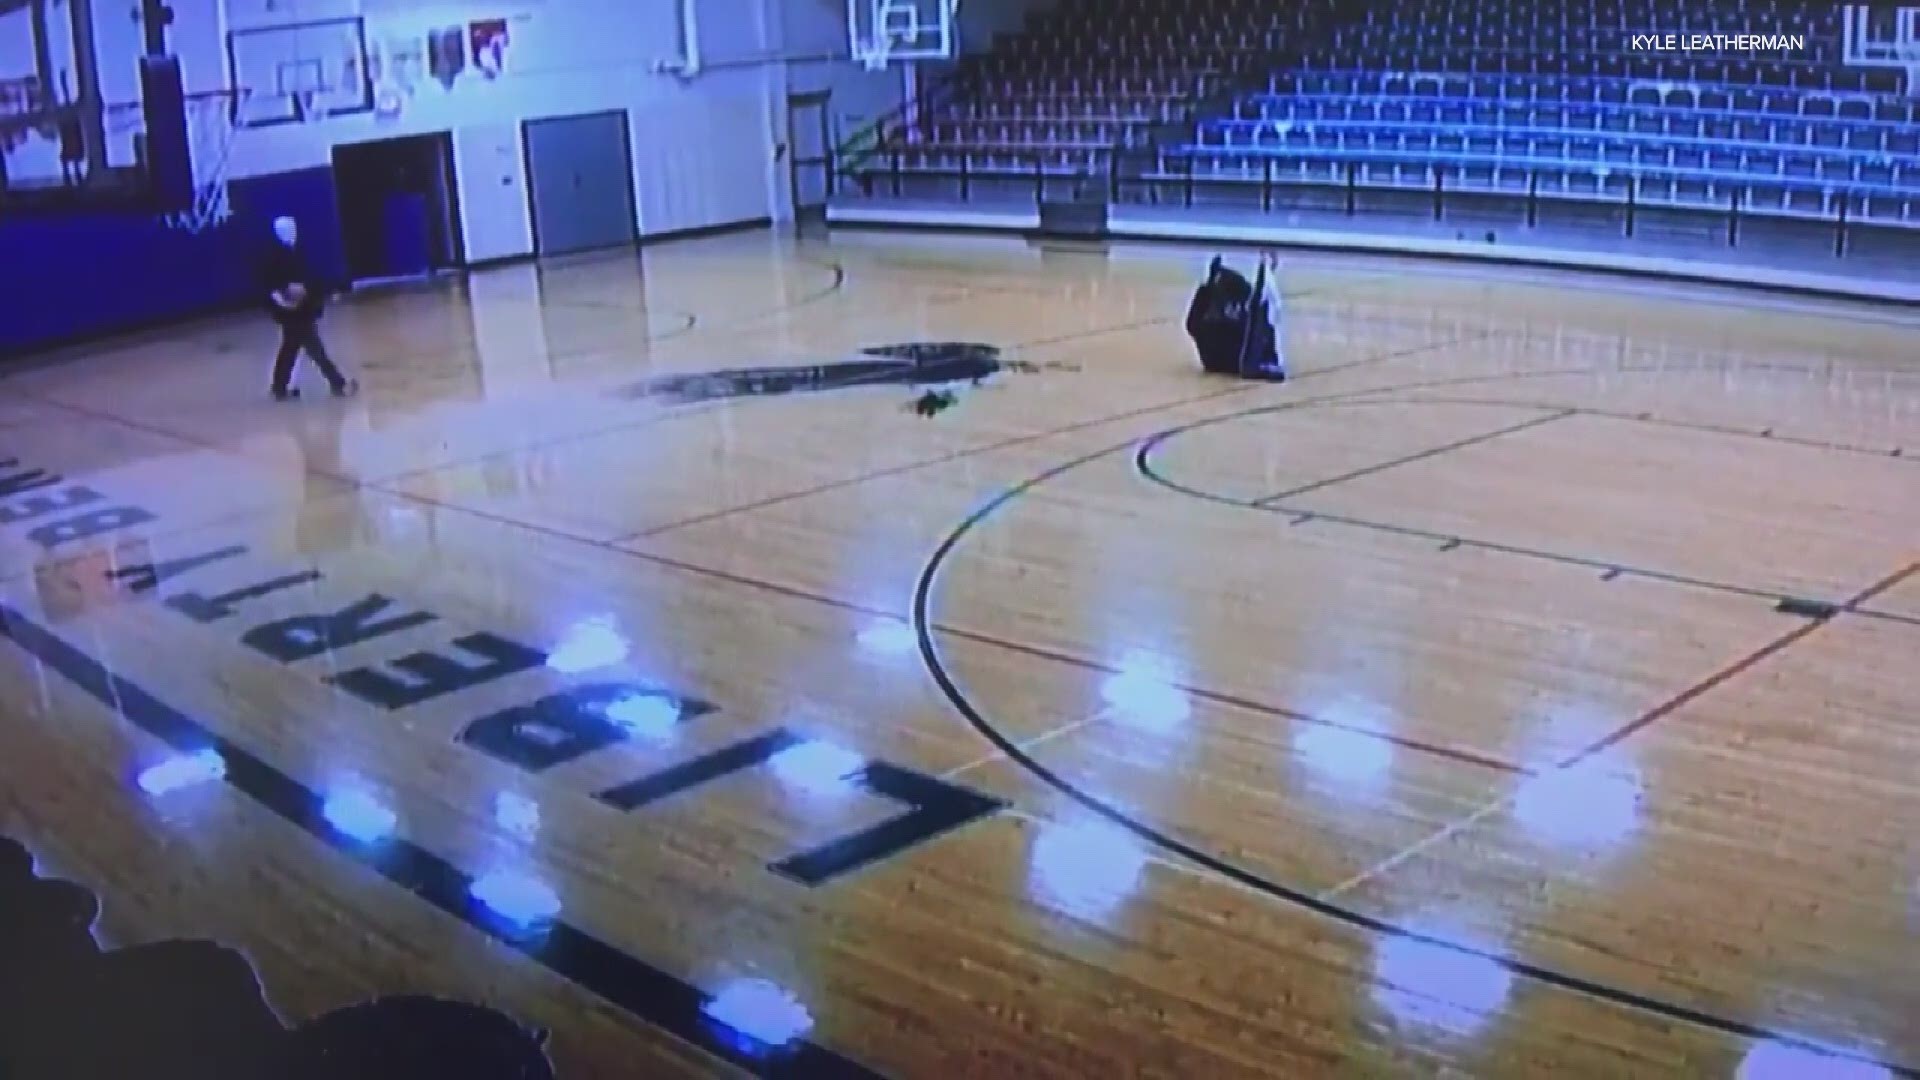 Joe Orians calmly nailed a half-court shot over his head in an empty Ohio gymnasium Thursday morning.